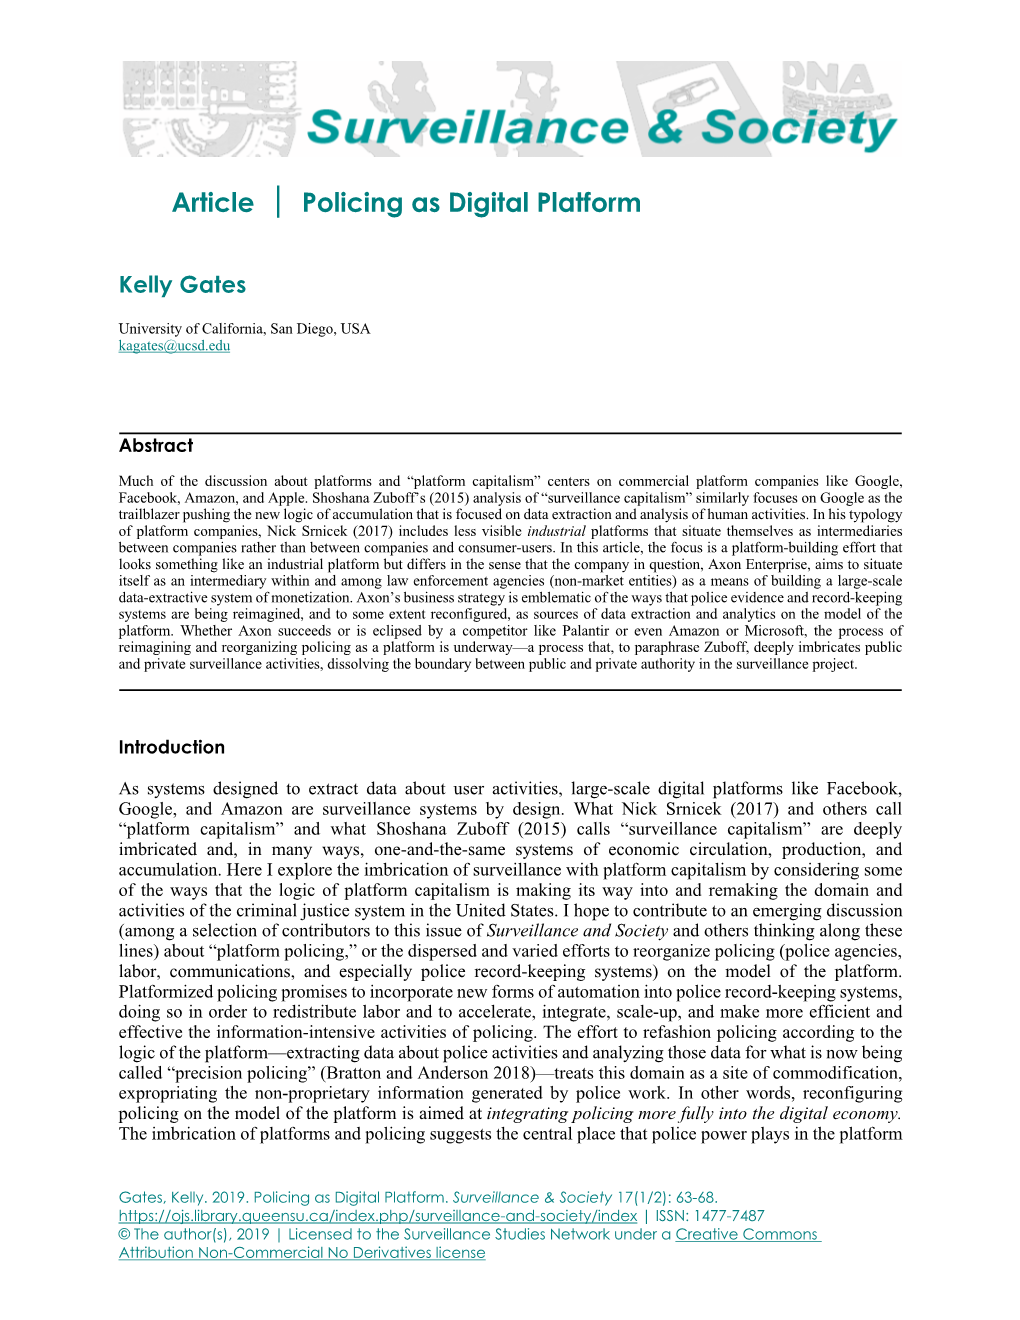 Article Policing As Digital Platform